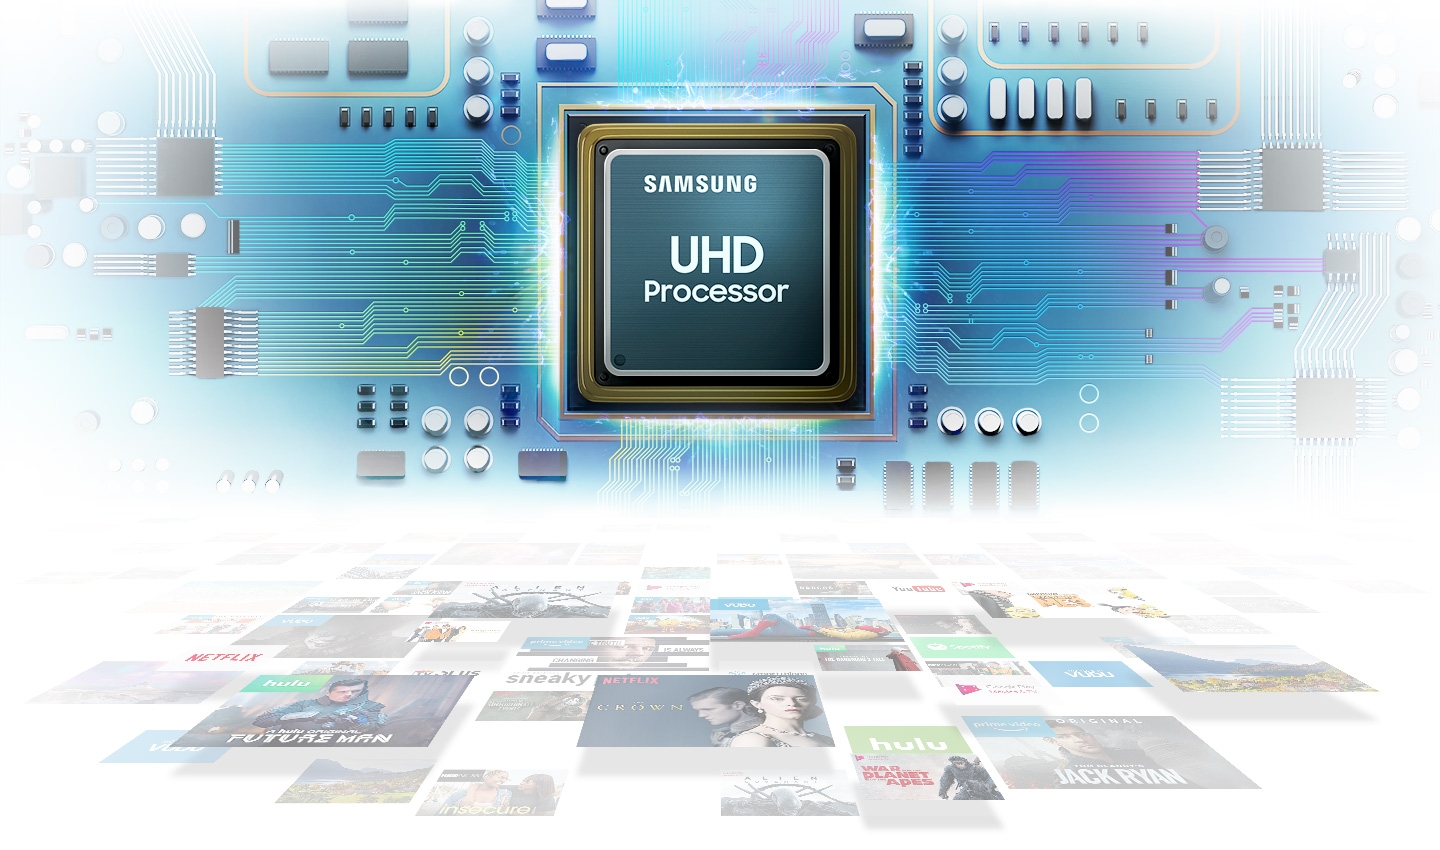 UHD processor, powerful image quality